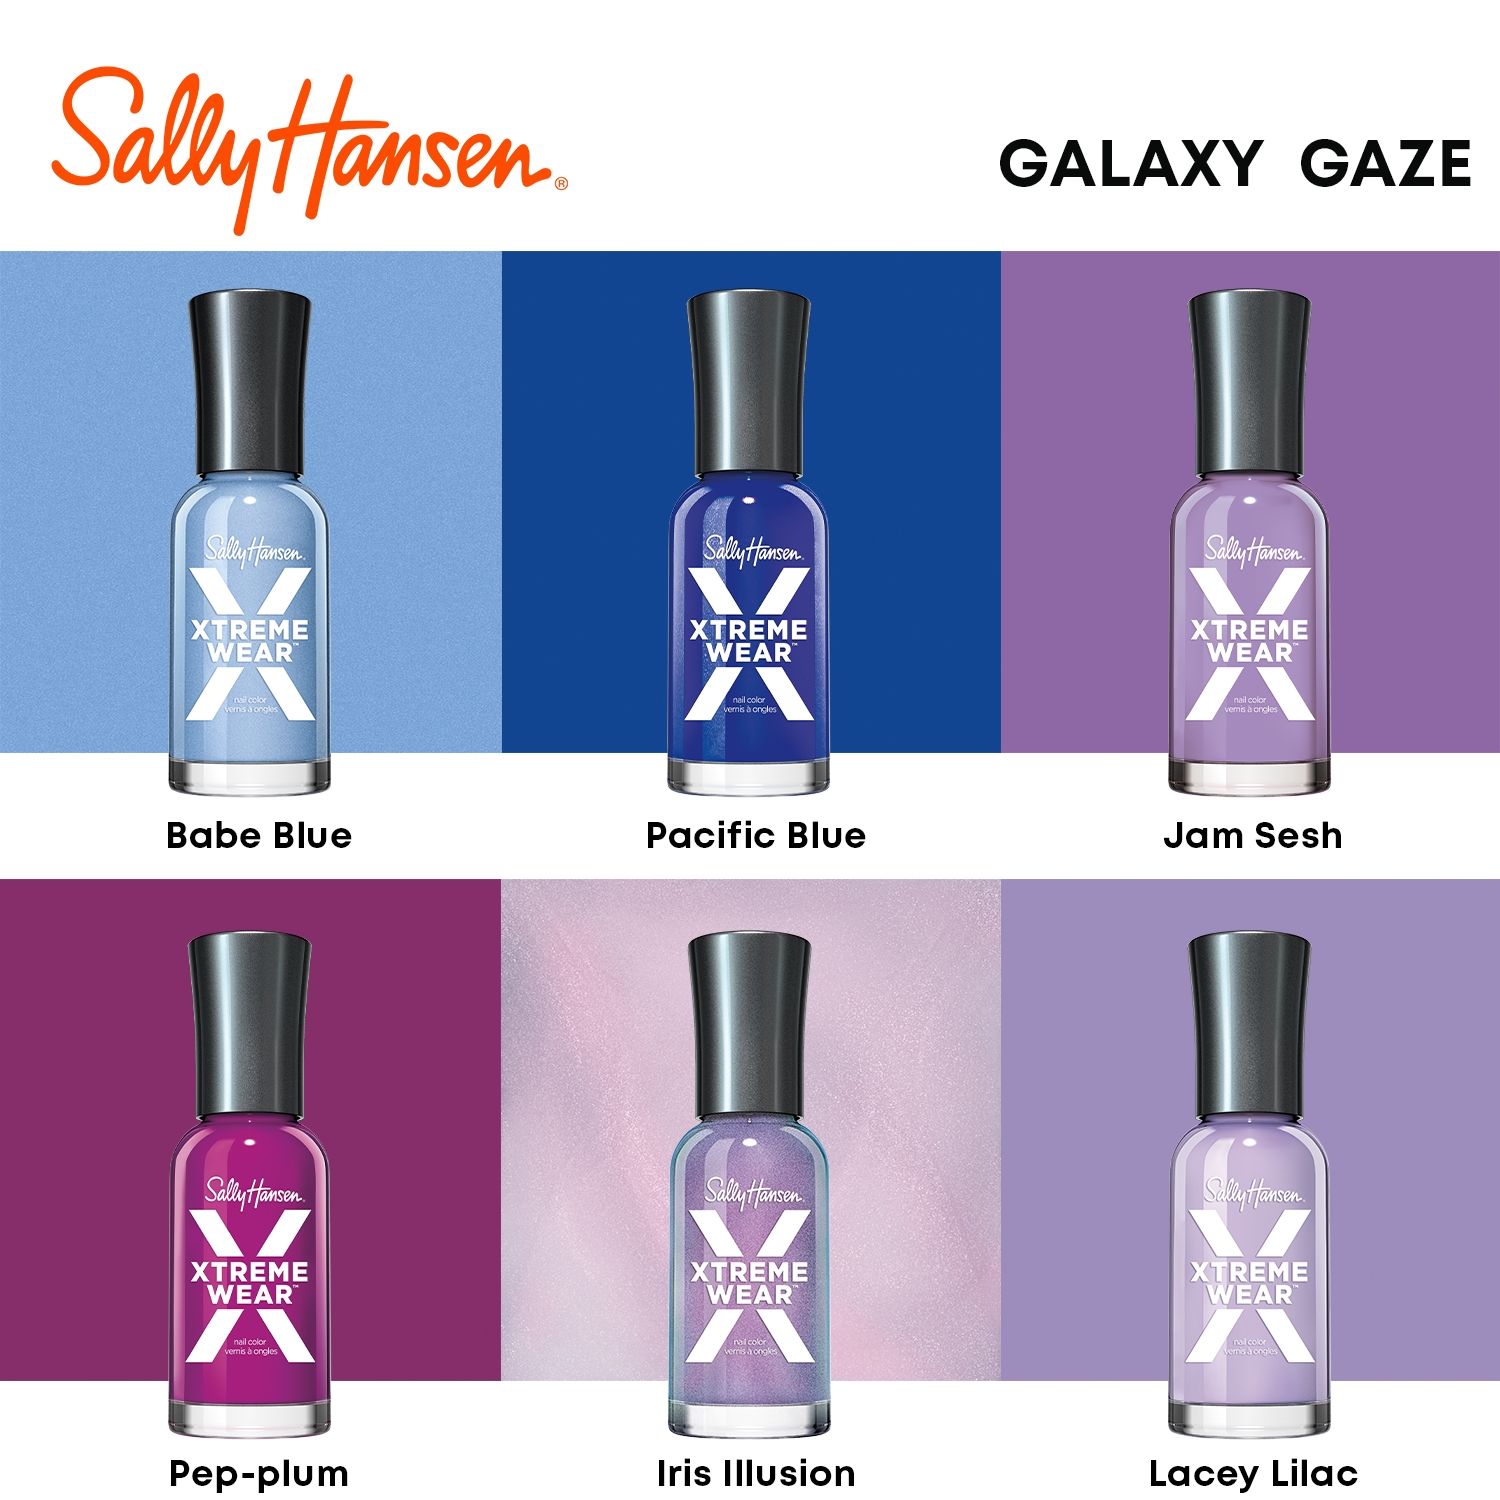 Sally Hansen Xtreme Wear Nail Color, Jam Sesh, 0.4 oz, Color Nail Polish, Nail Polish, Quick Dry Nail Polish, Nail Polish Colors, Chip Resistant, Bold Color - image 6 of 14